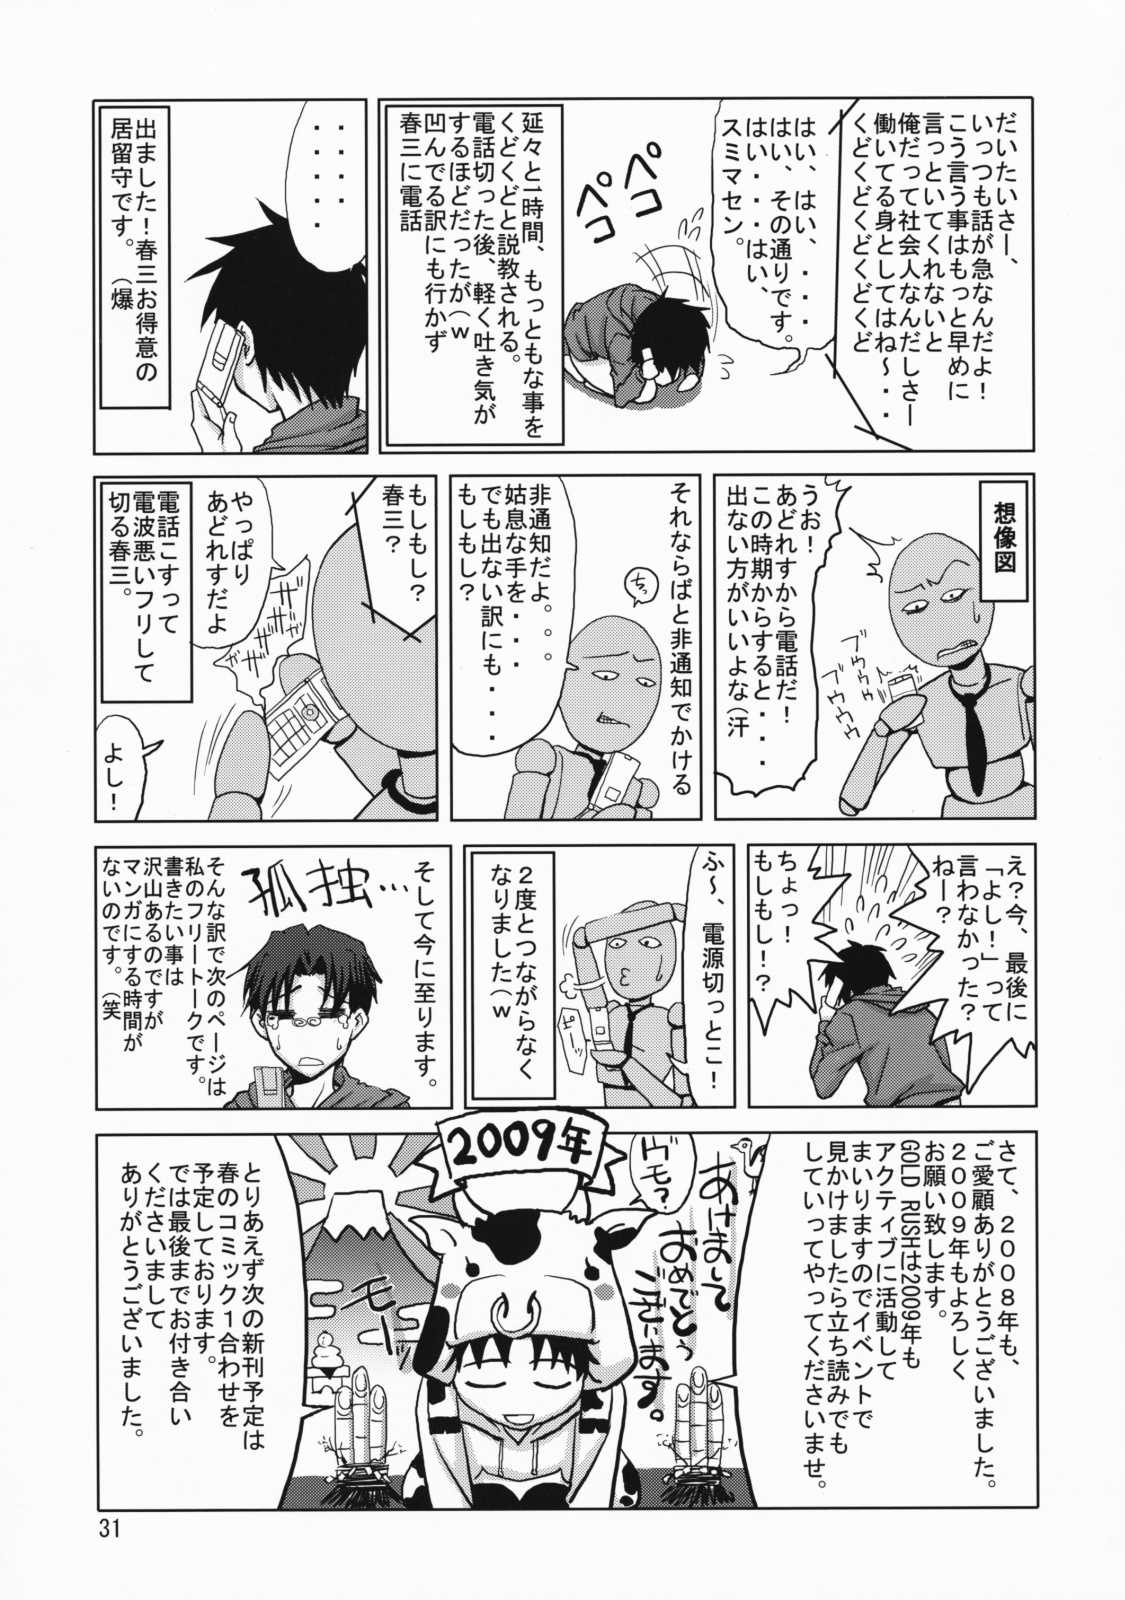 [Gold Rush] Comic Daybreak Vol.4 - Gold Rush 64 (Gundam00) 